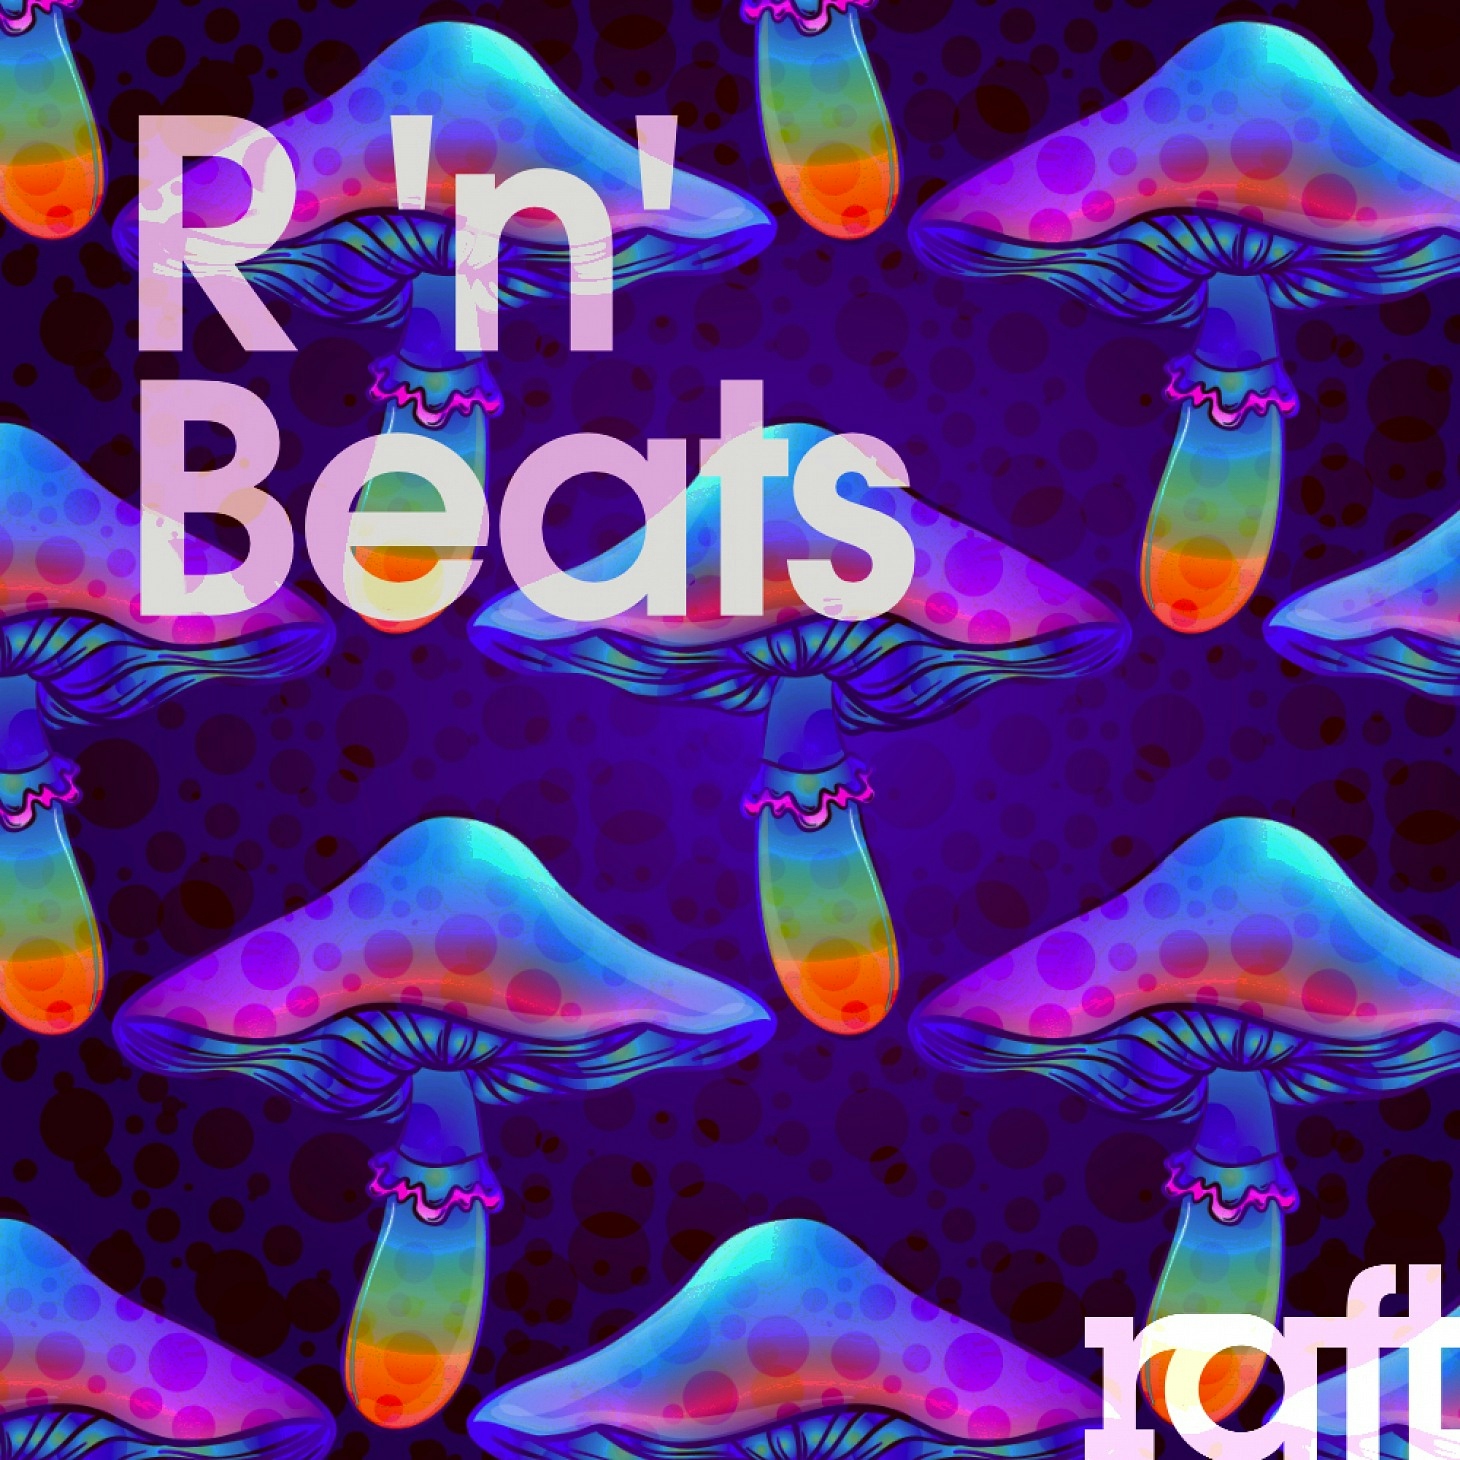 RFT068 R 'n' Beats